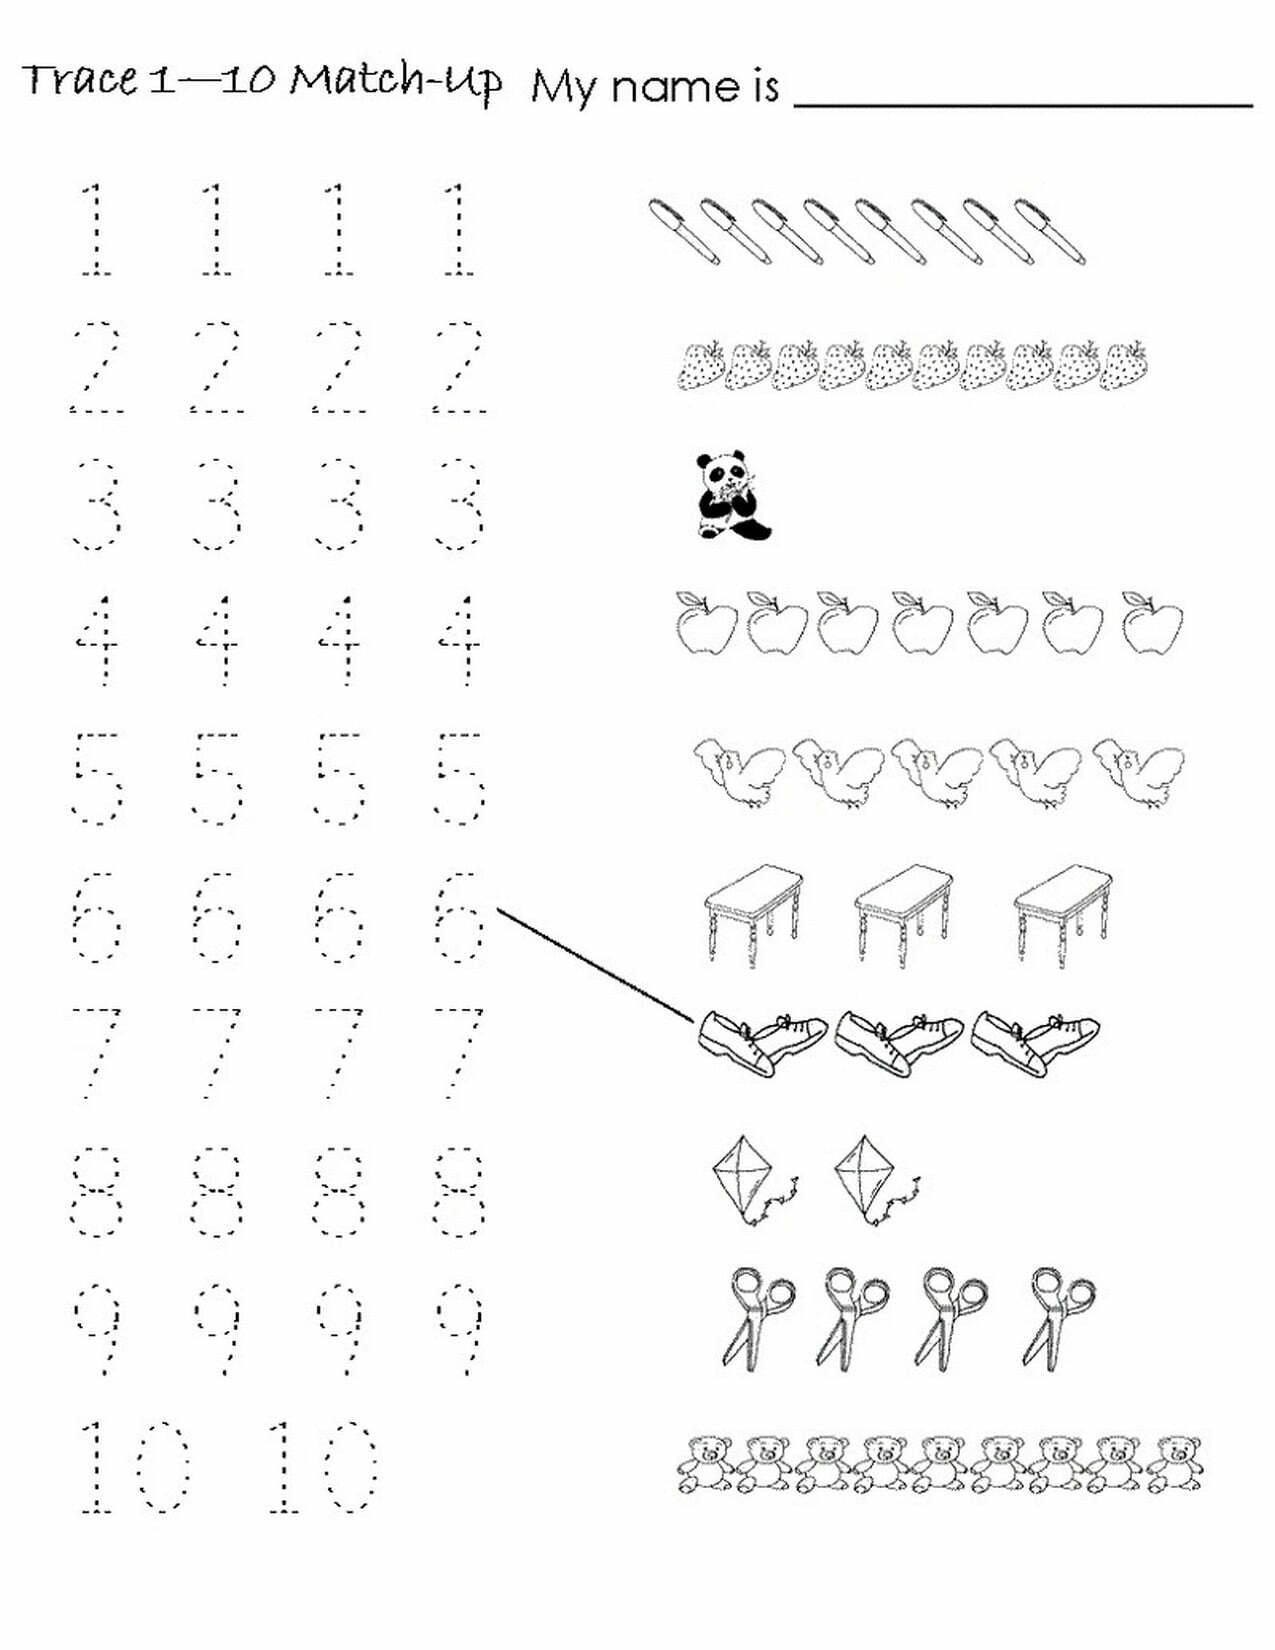 tracing numbers 1-10 worksheet practice – Learning Printable